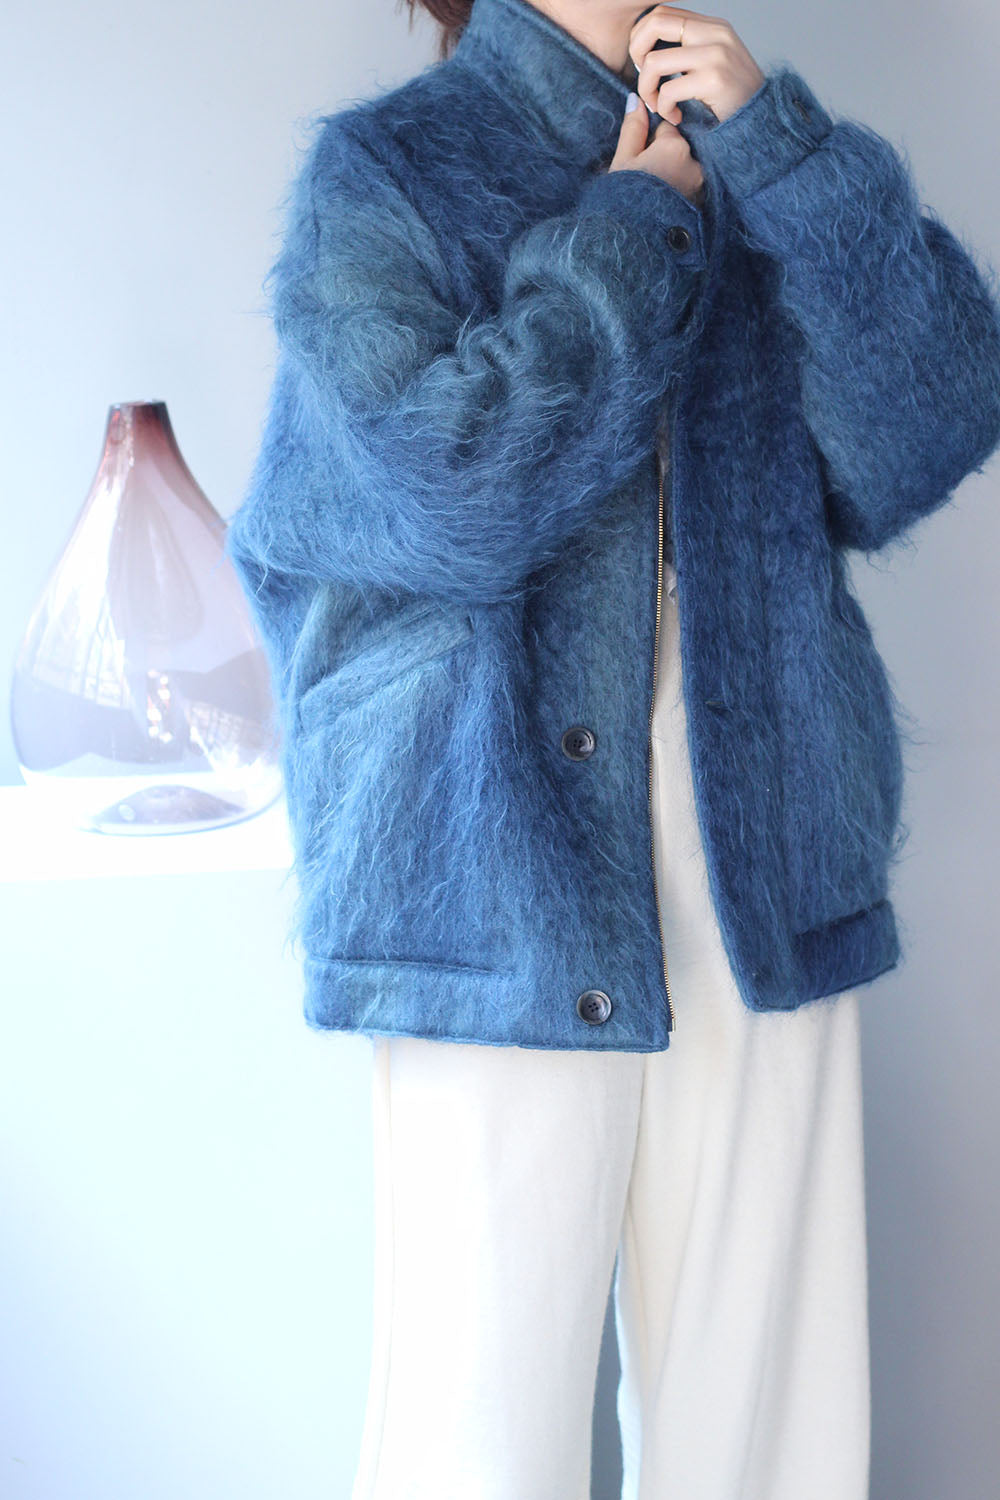 ERiKO KATORi "flow dye kidmohair harrington jacket" (blue)